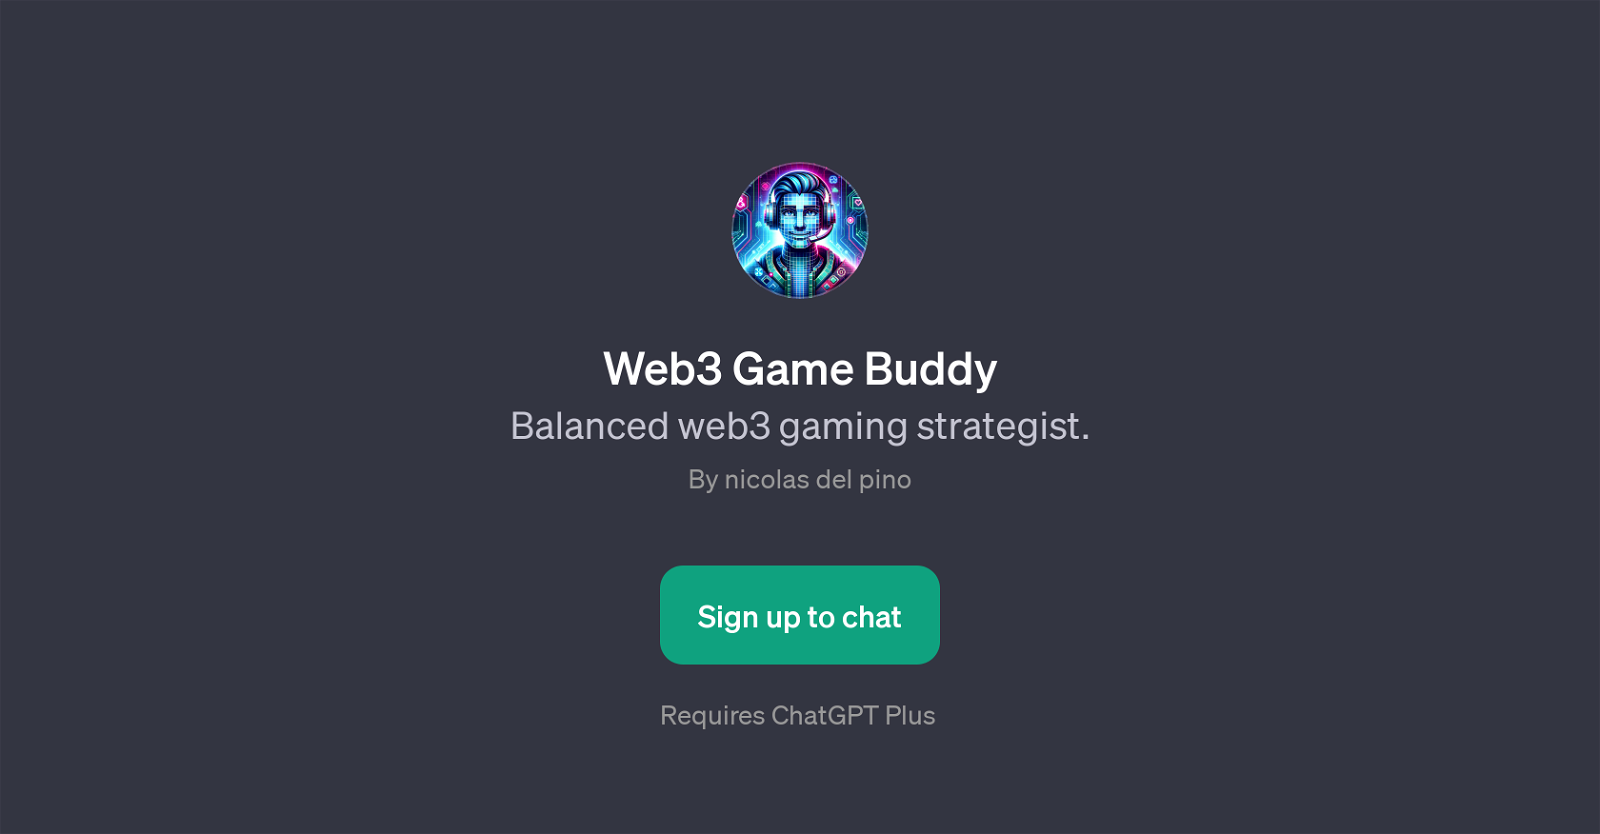 Web3 Game Buddy website